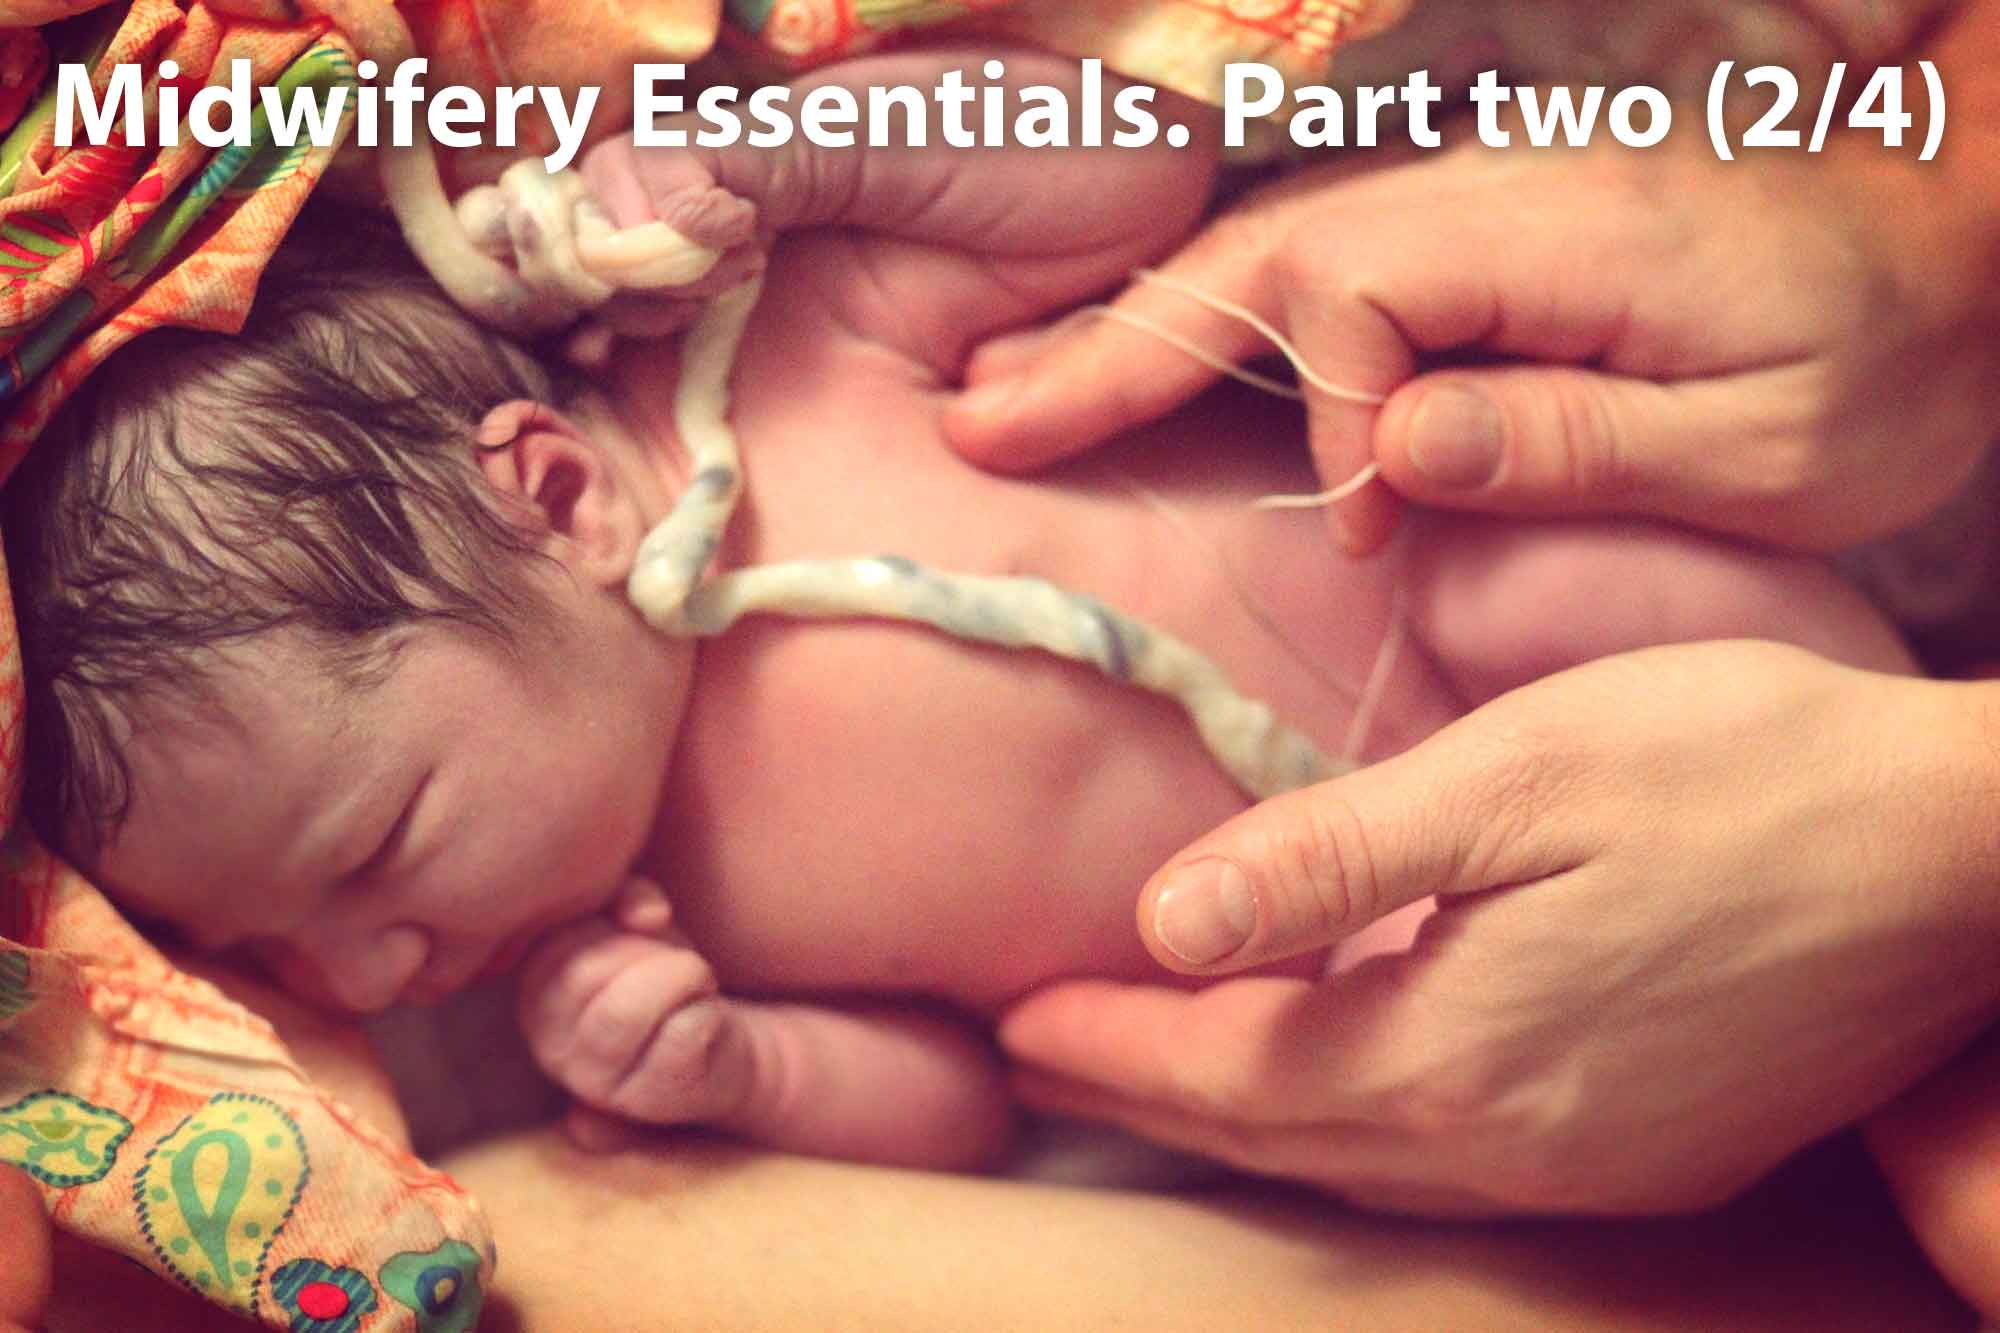 Midwifery Essentials. Part two (2/4)